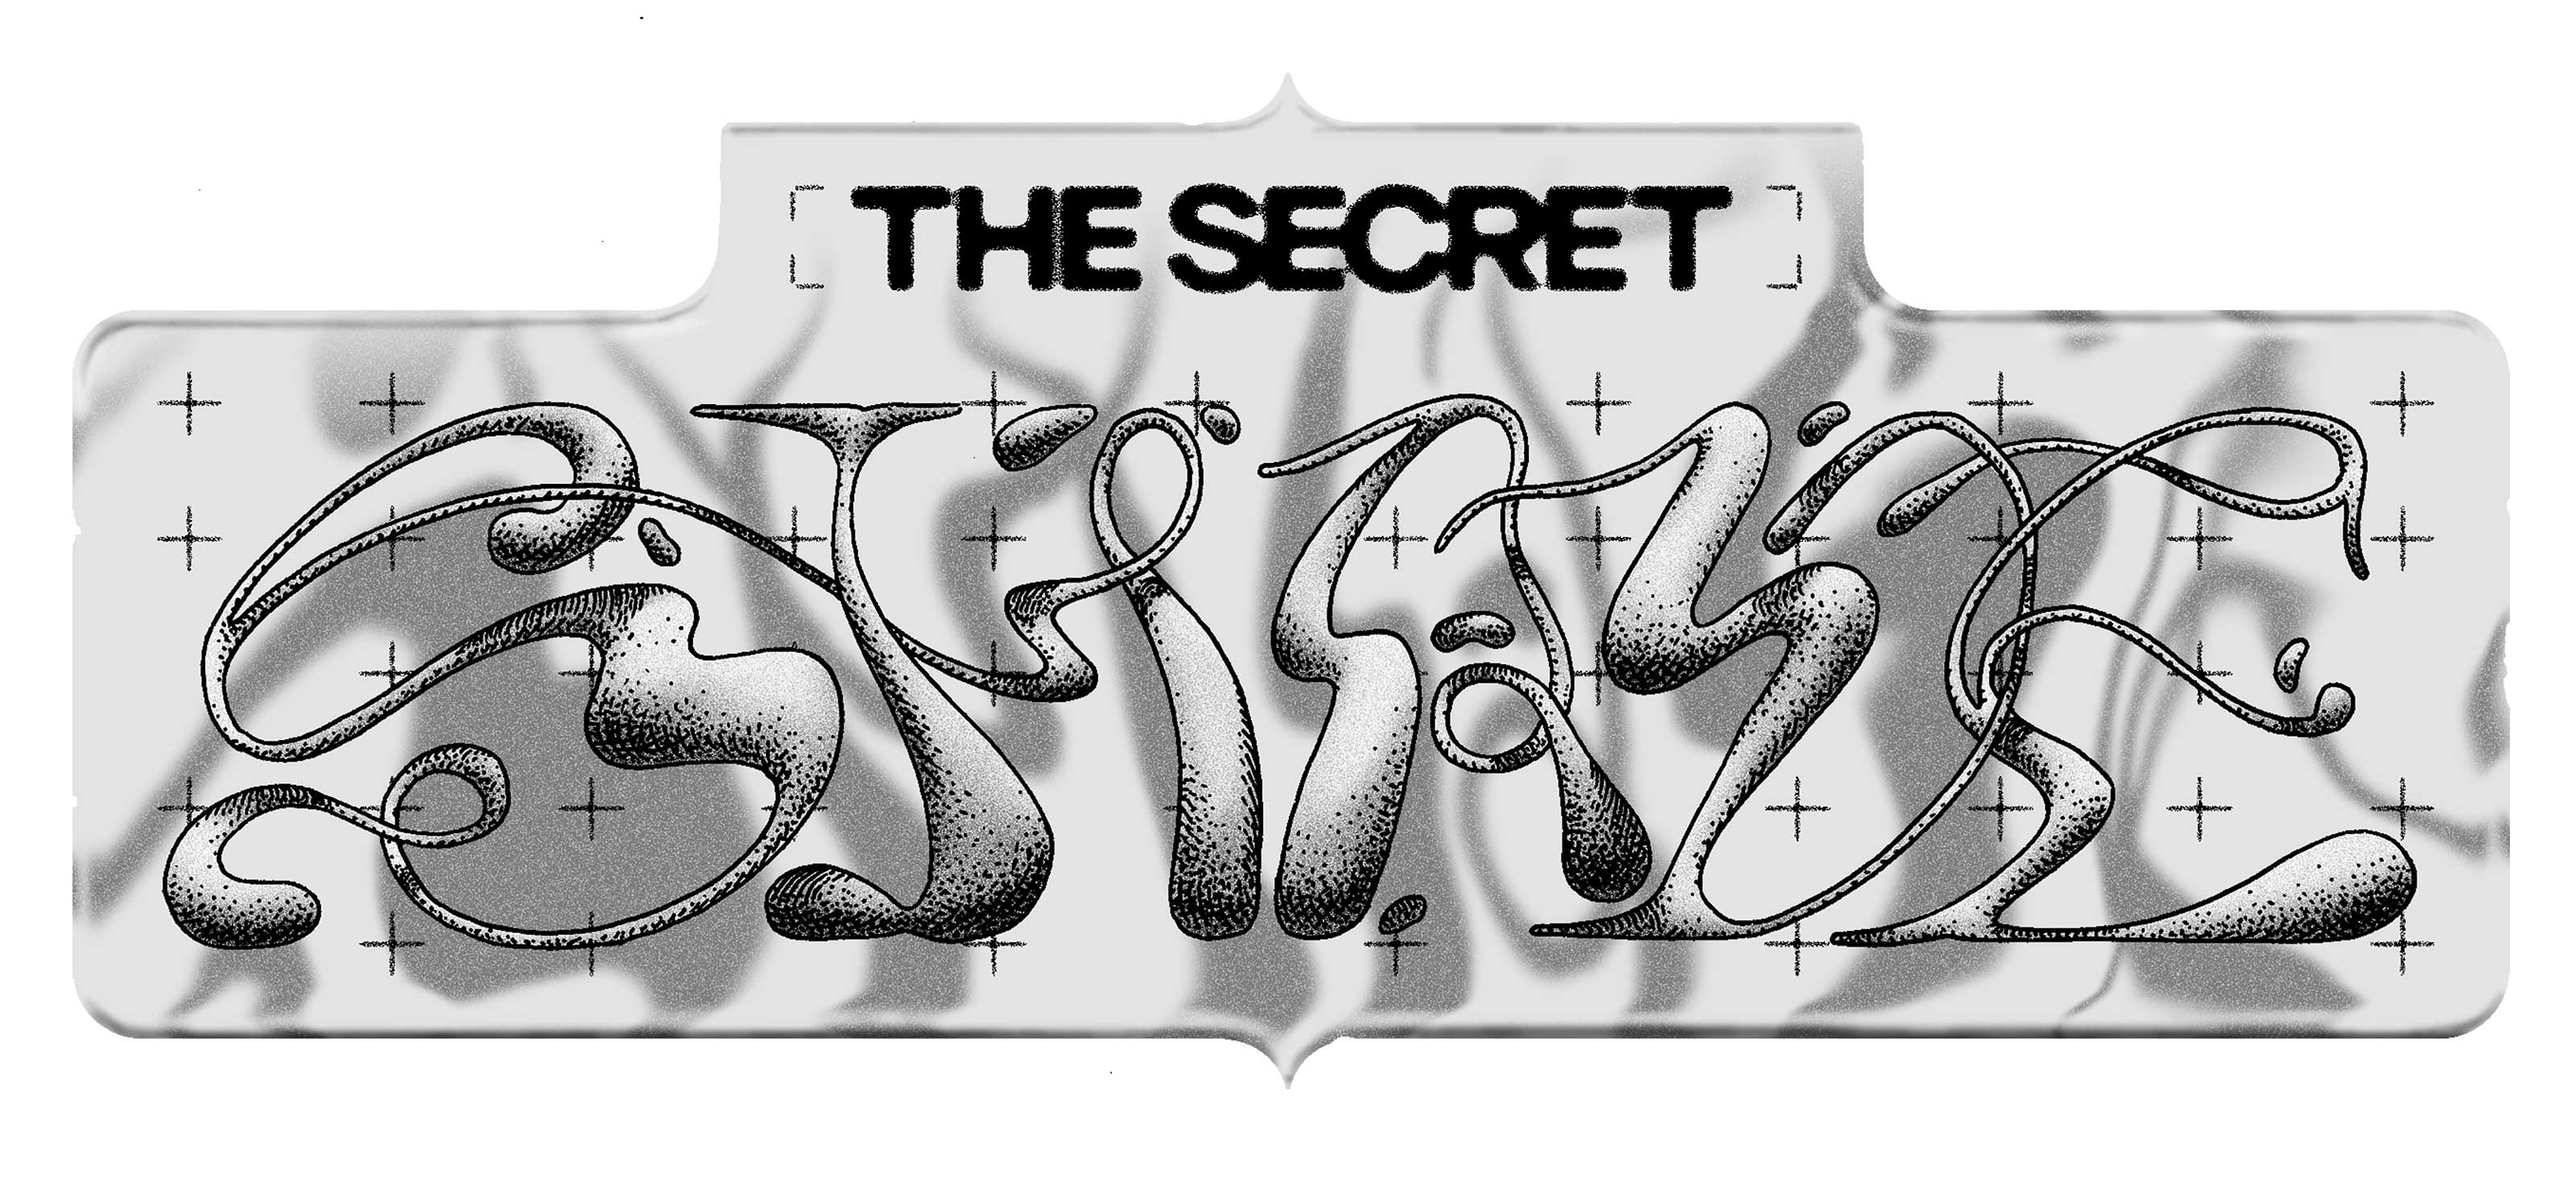 The Secret Shade Show by i-sha for NOODS Radio